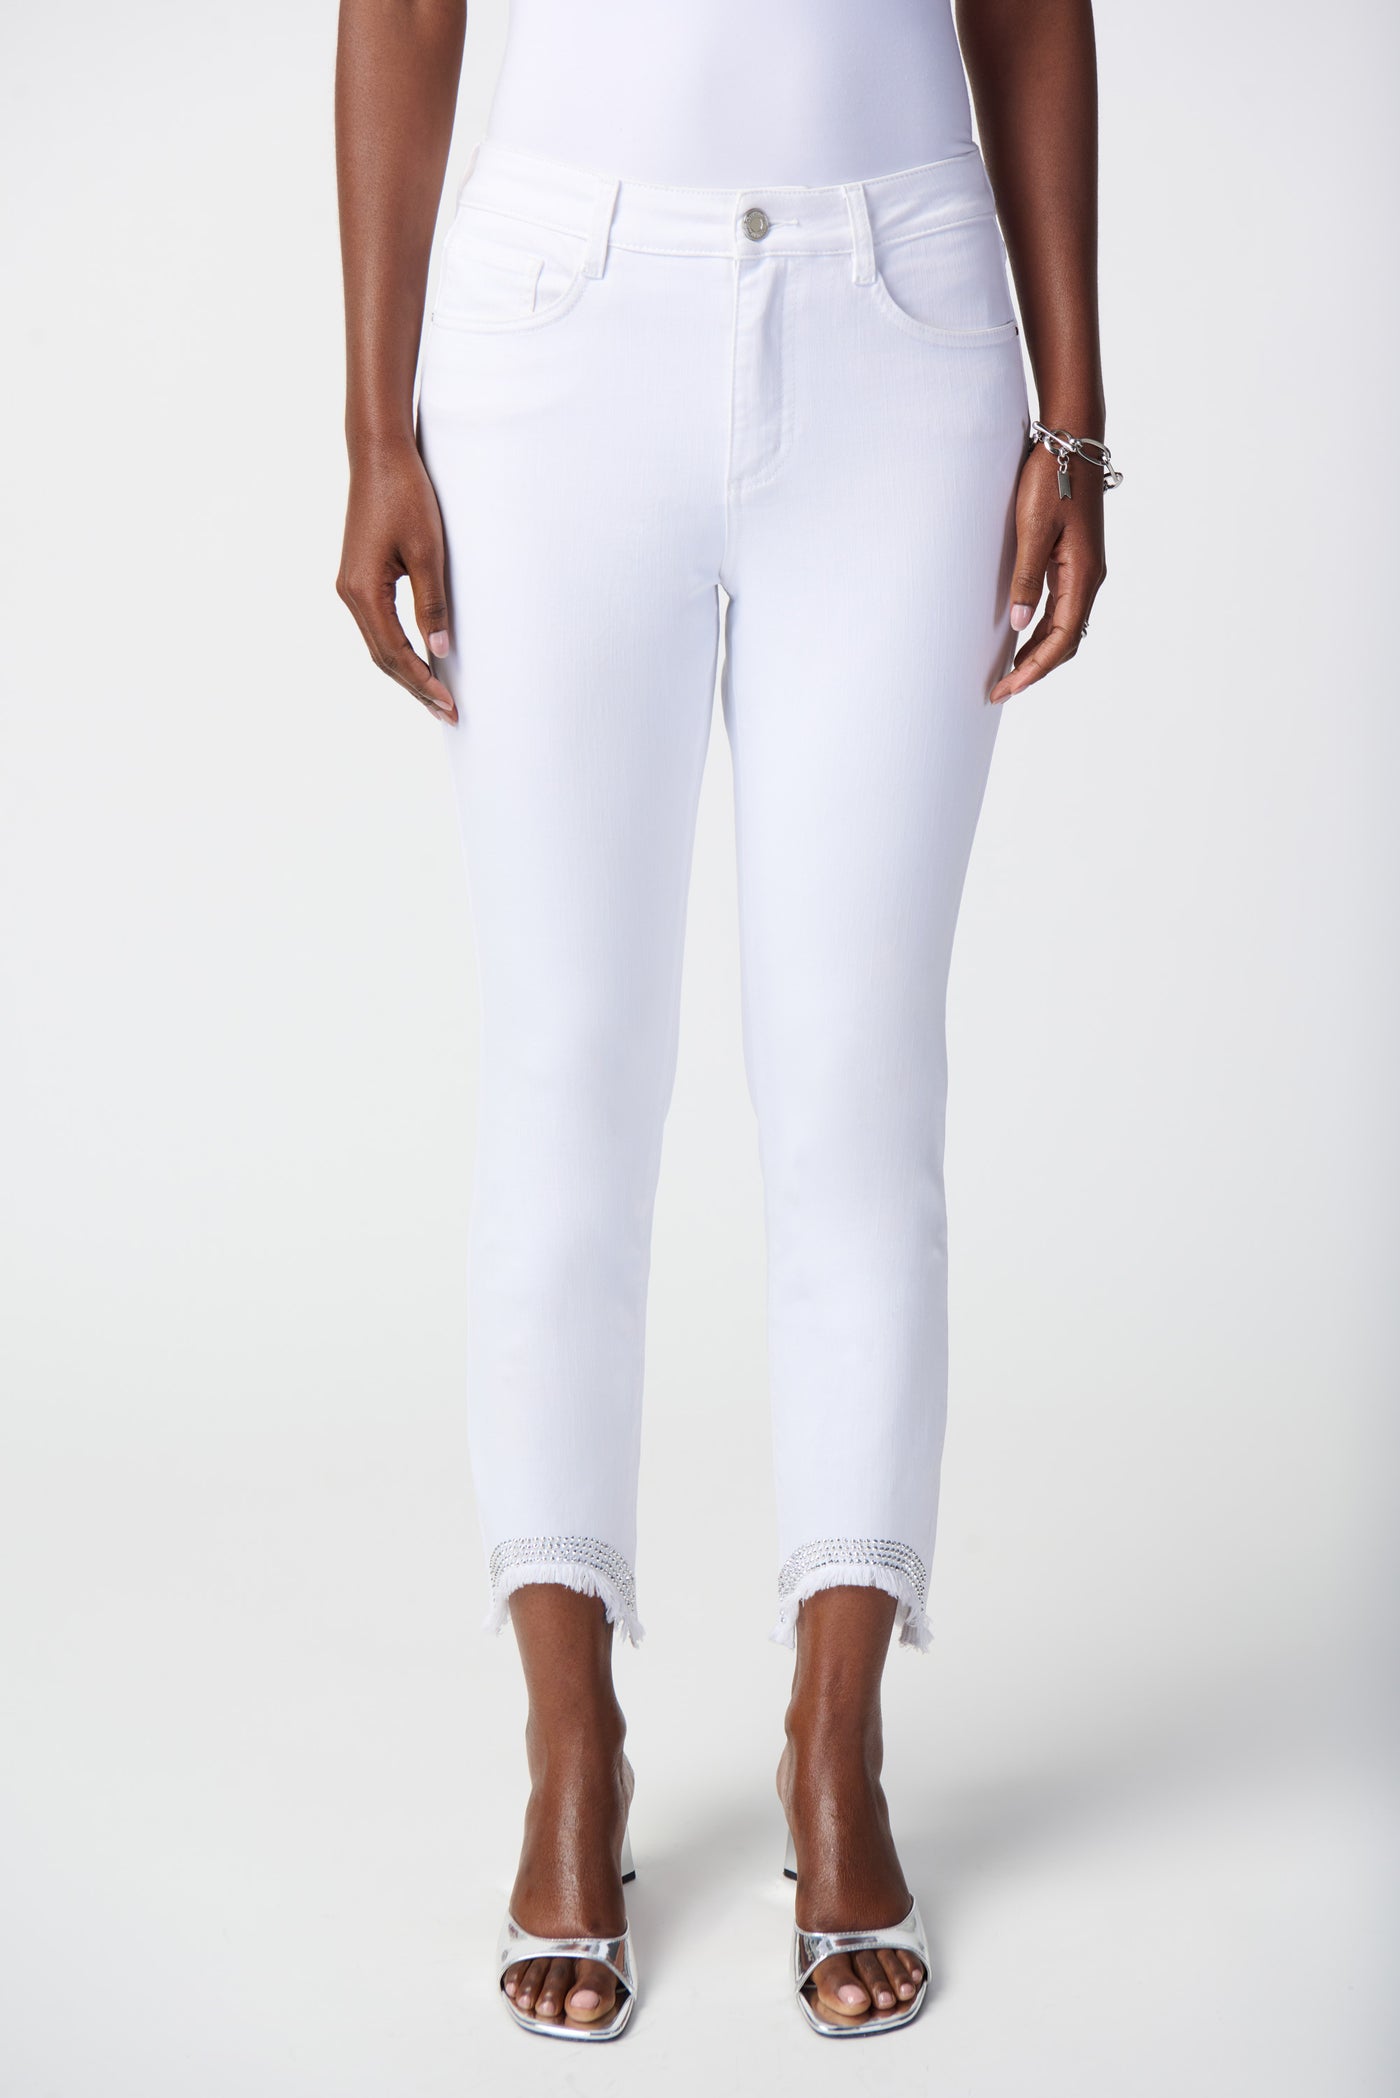 Joseph Ribkoff White Cropped Jeans with Frayed Hem